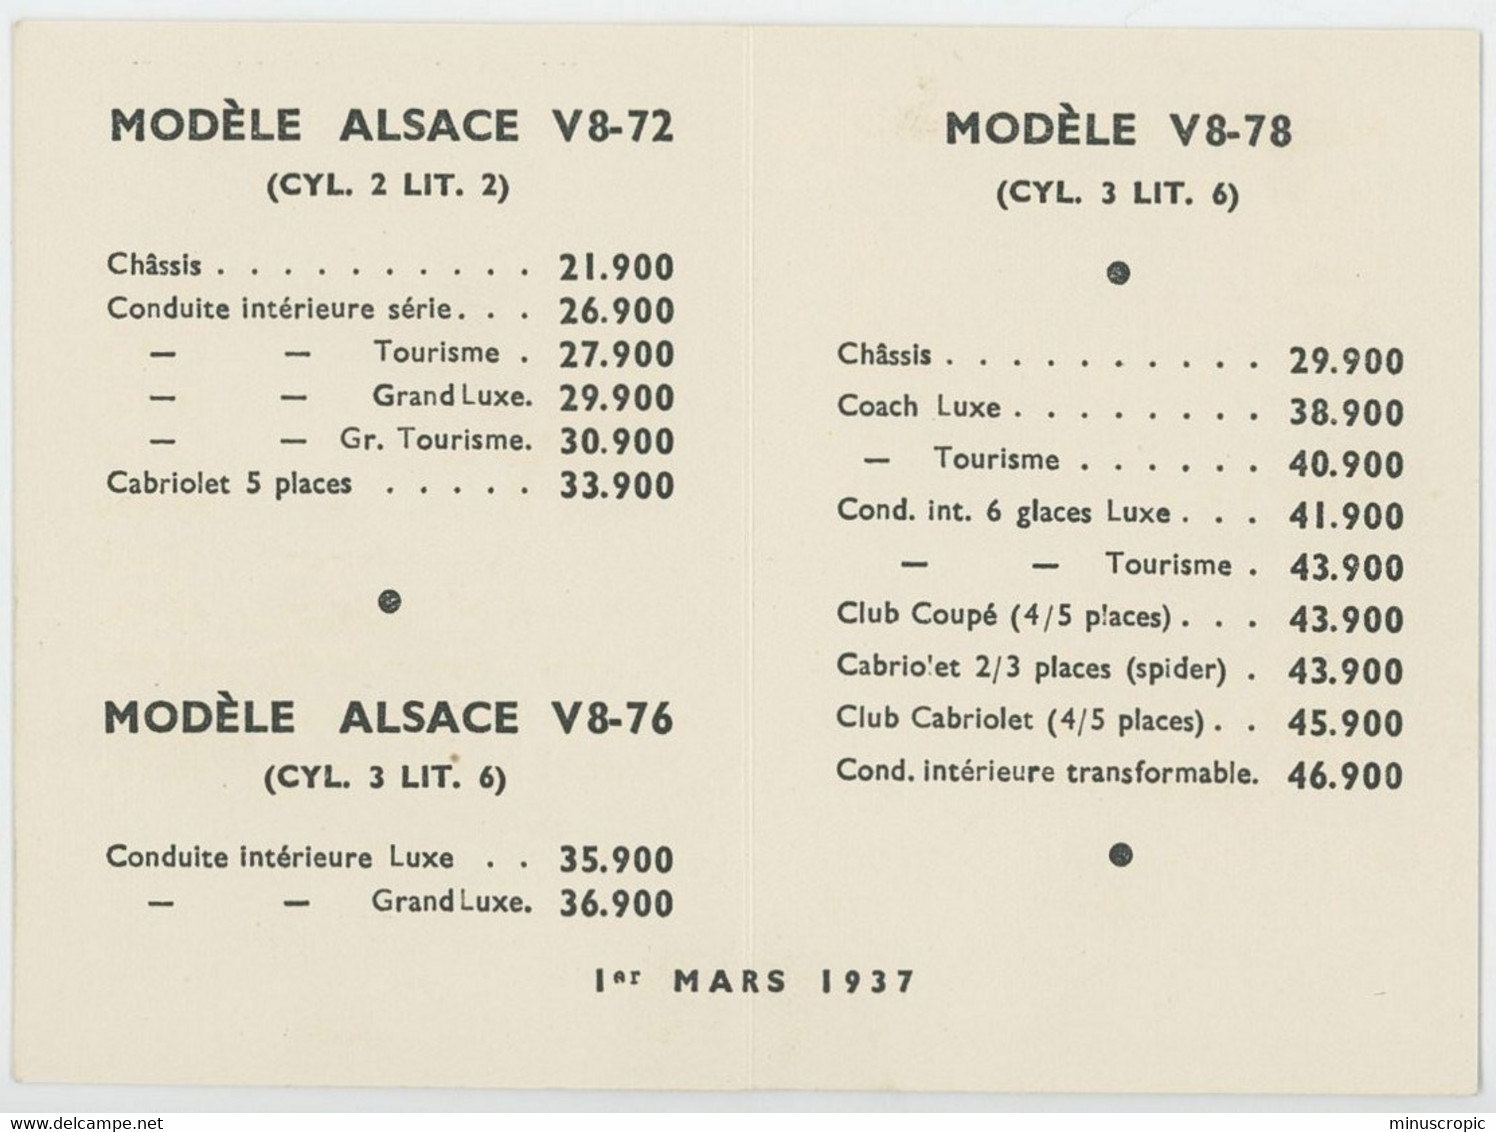 MatFord - Tarifs - Modèles Tourisme - 1937 - Auto's